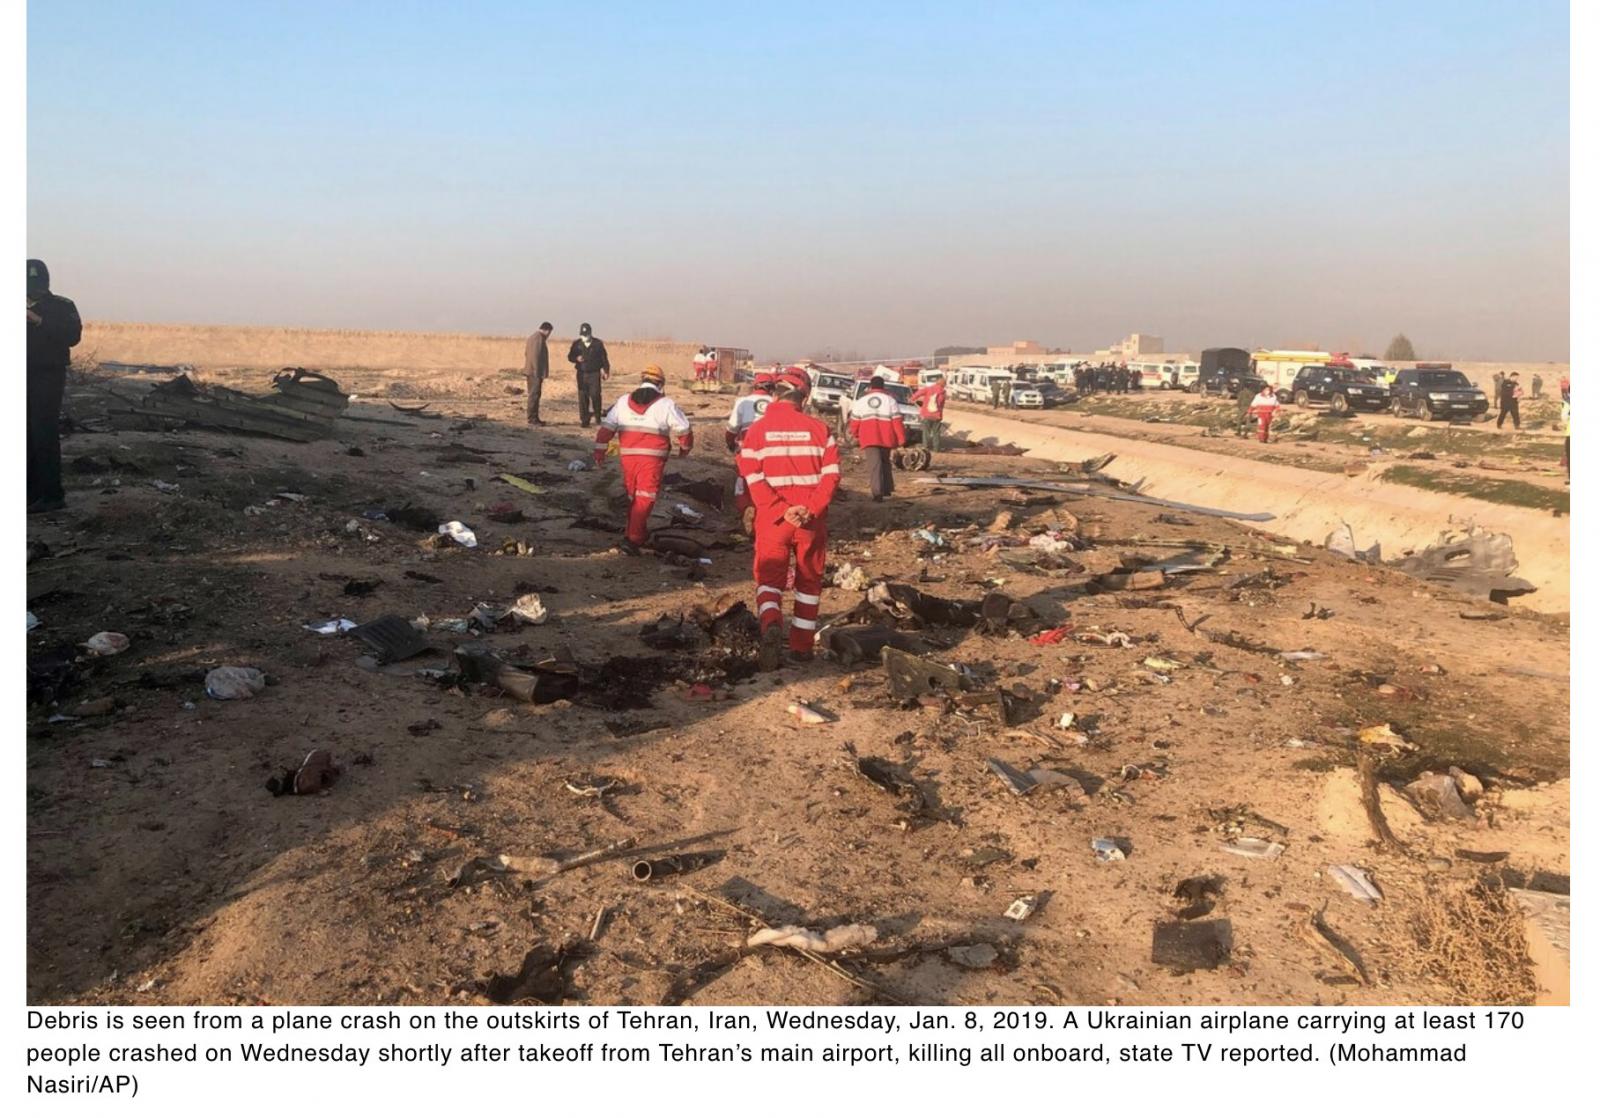  Ukrainian airplane crashes near Iran capital, killing 176